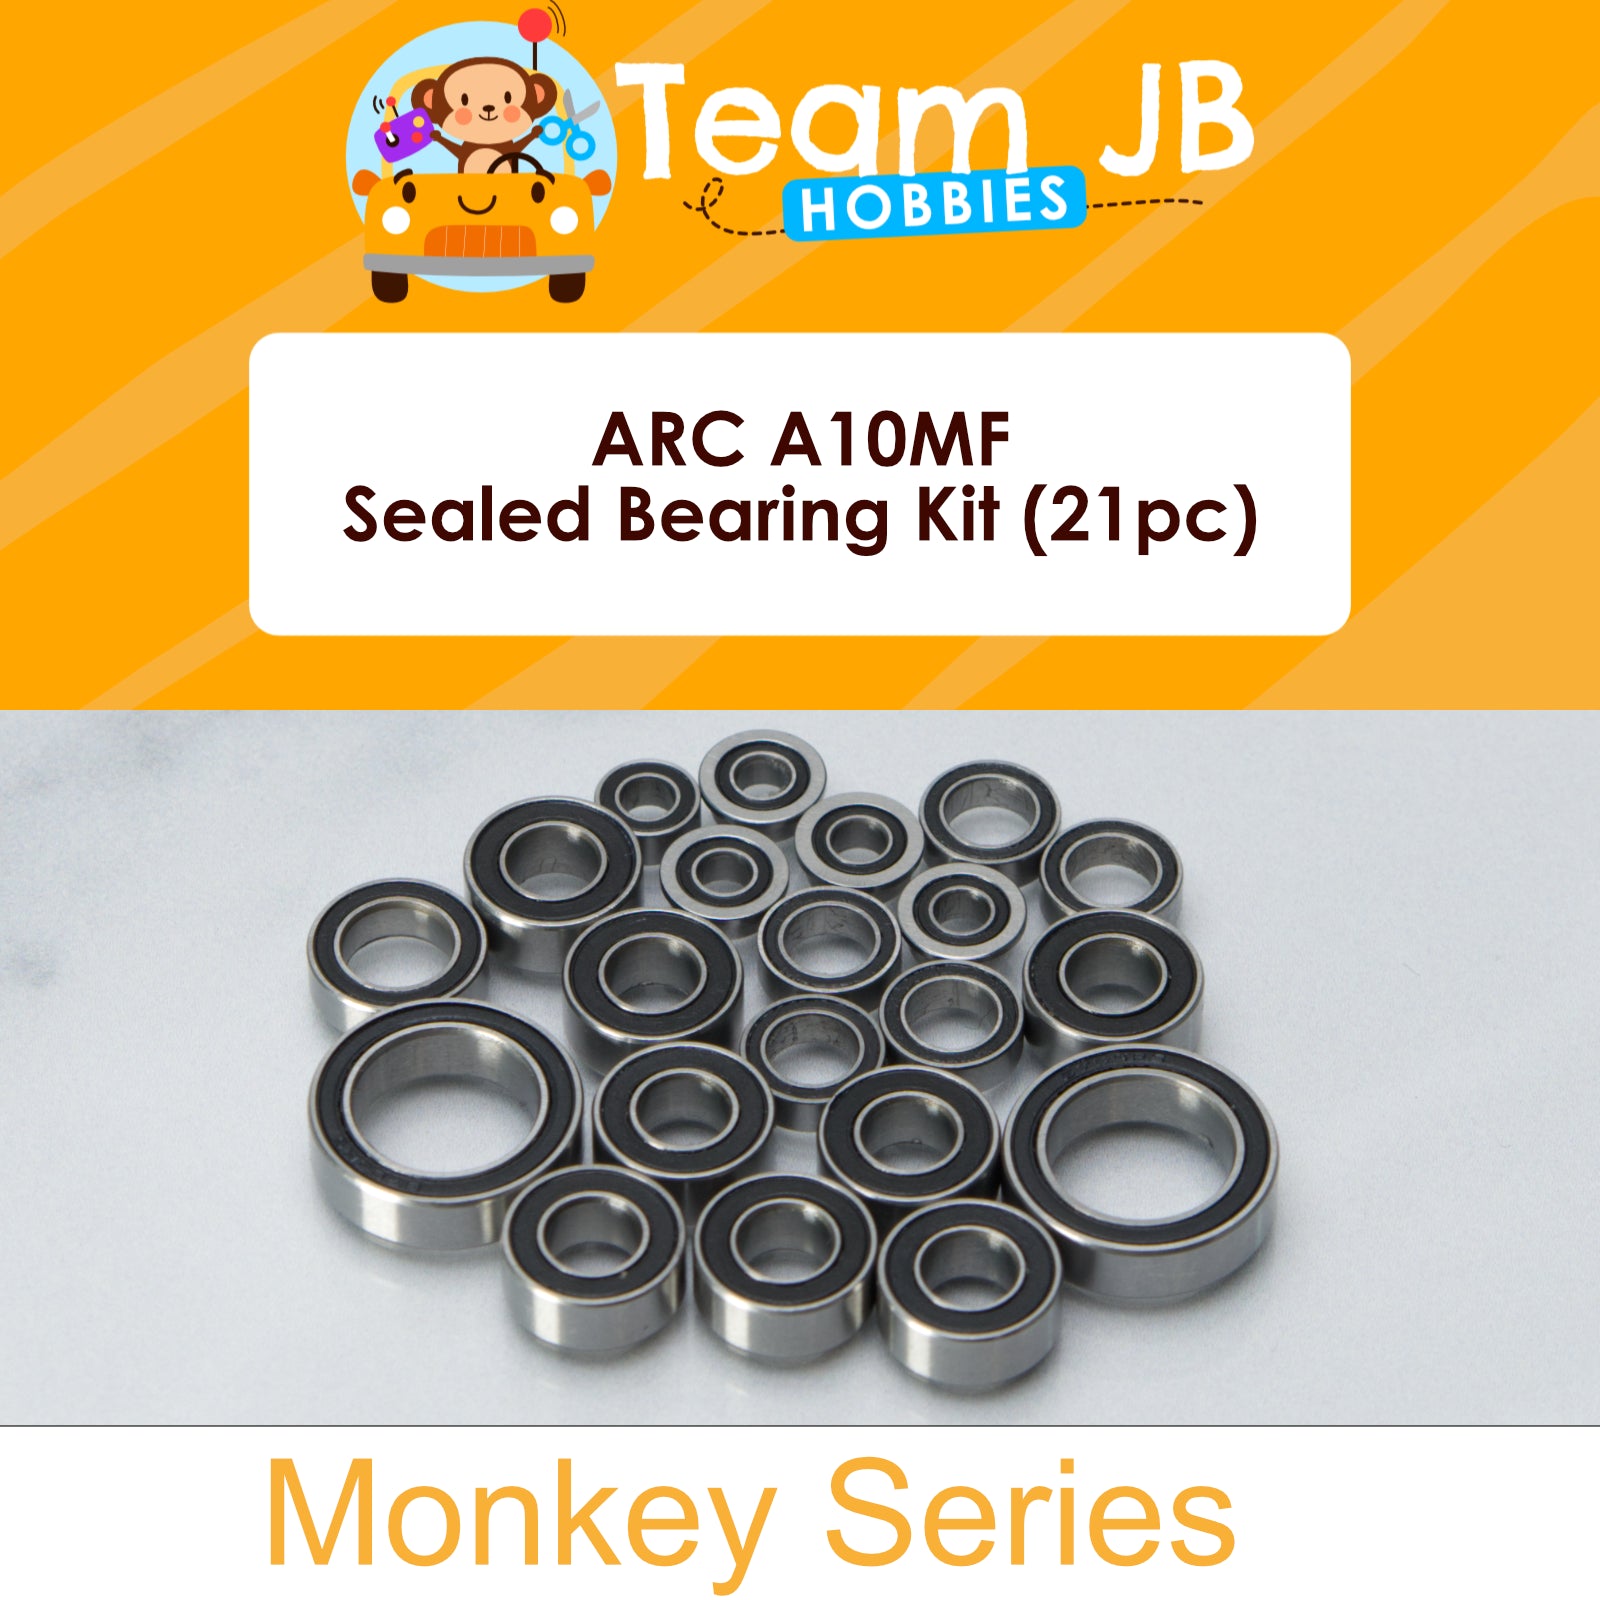 ARC A10MF - Sealed Bearing Kit